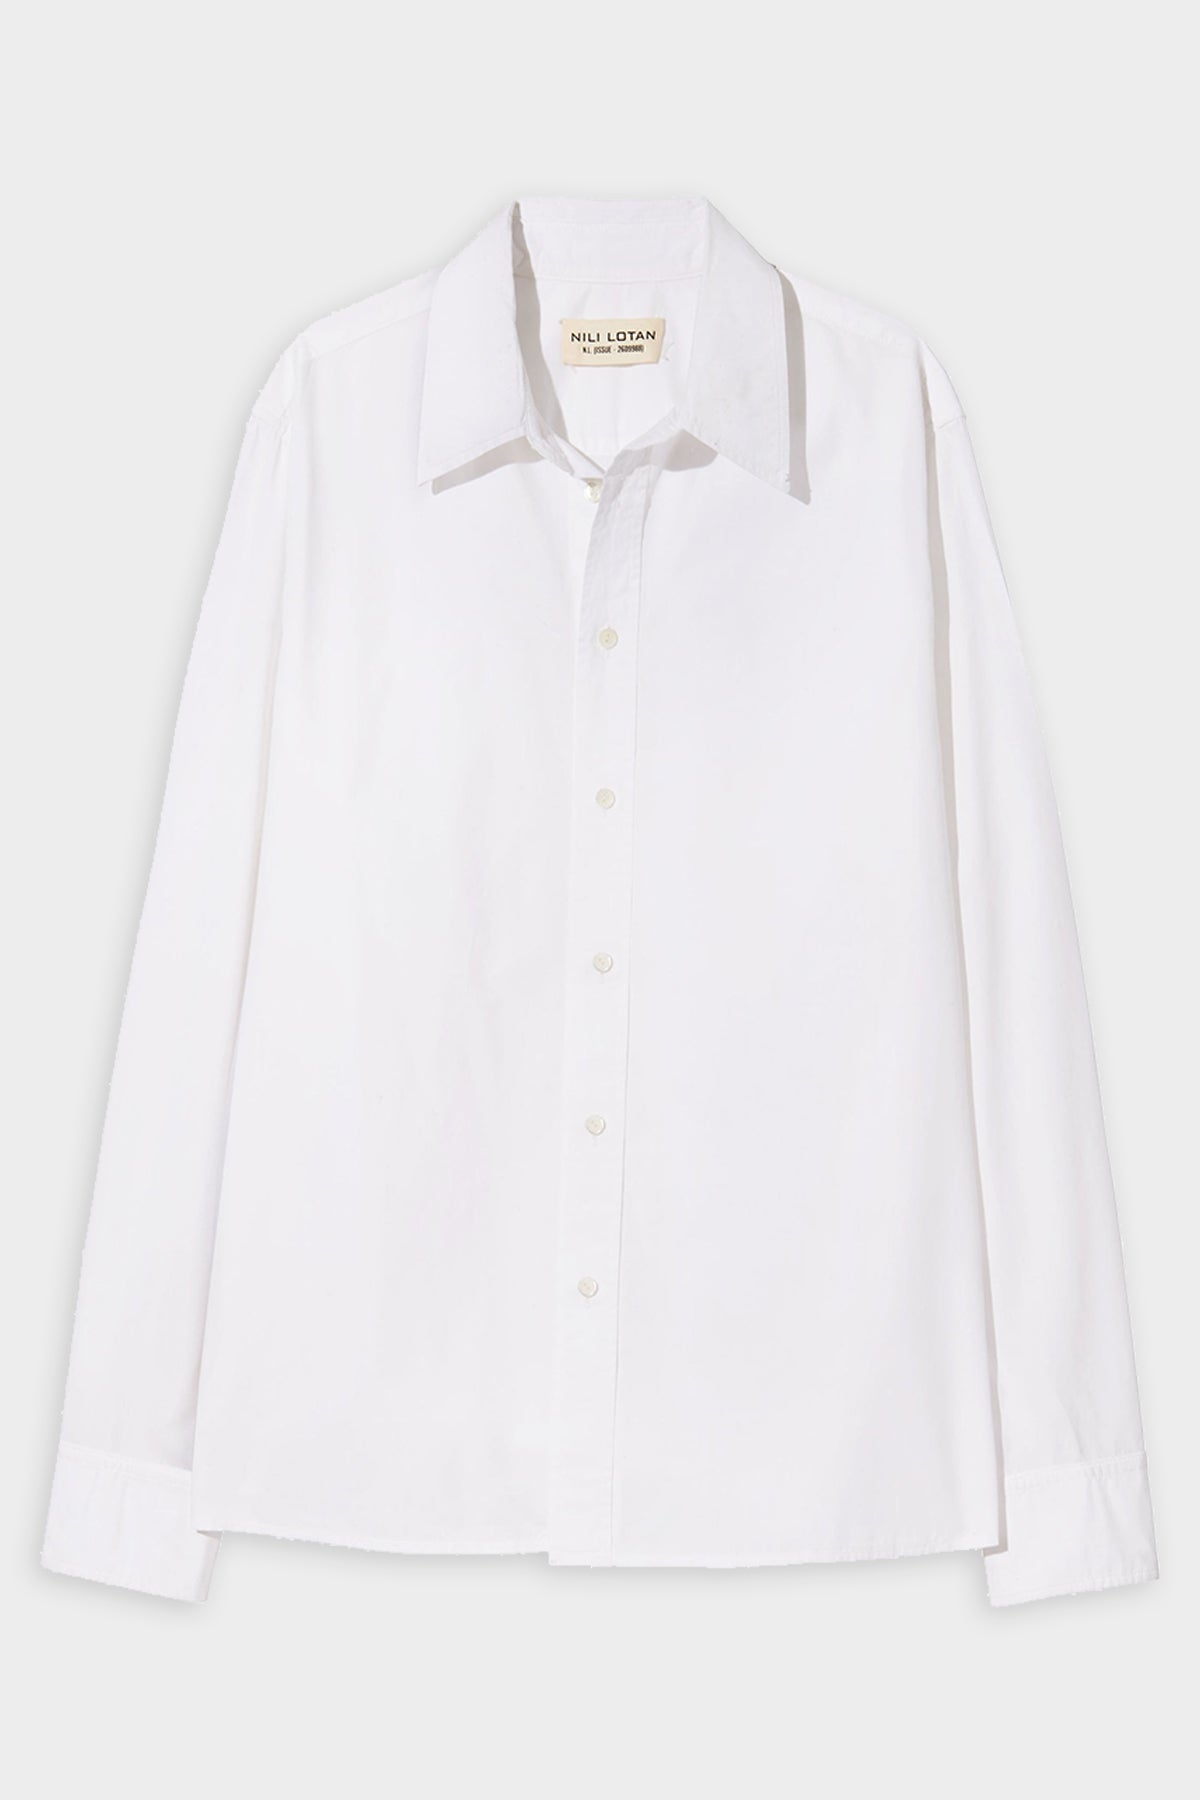 Raphael Classic Shirt in White - shop-olivia.com